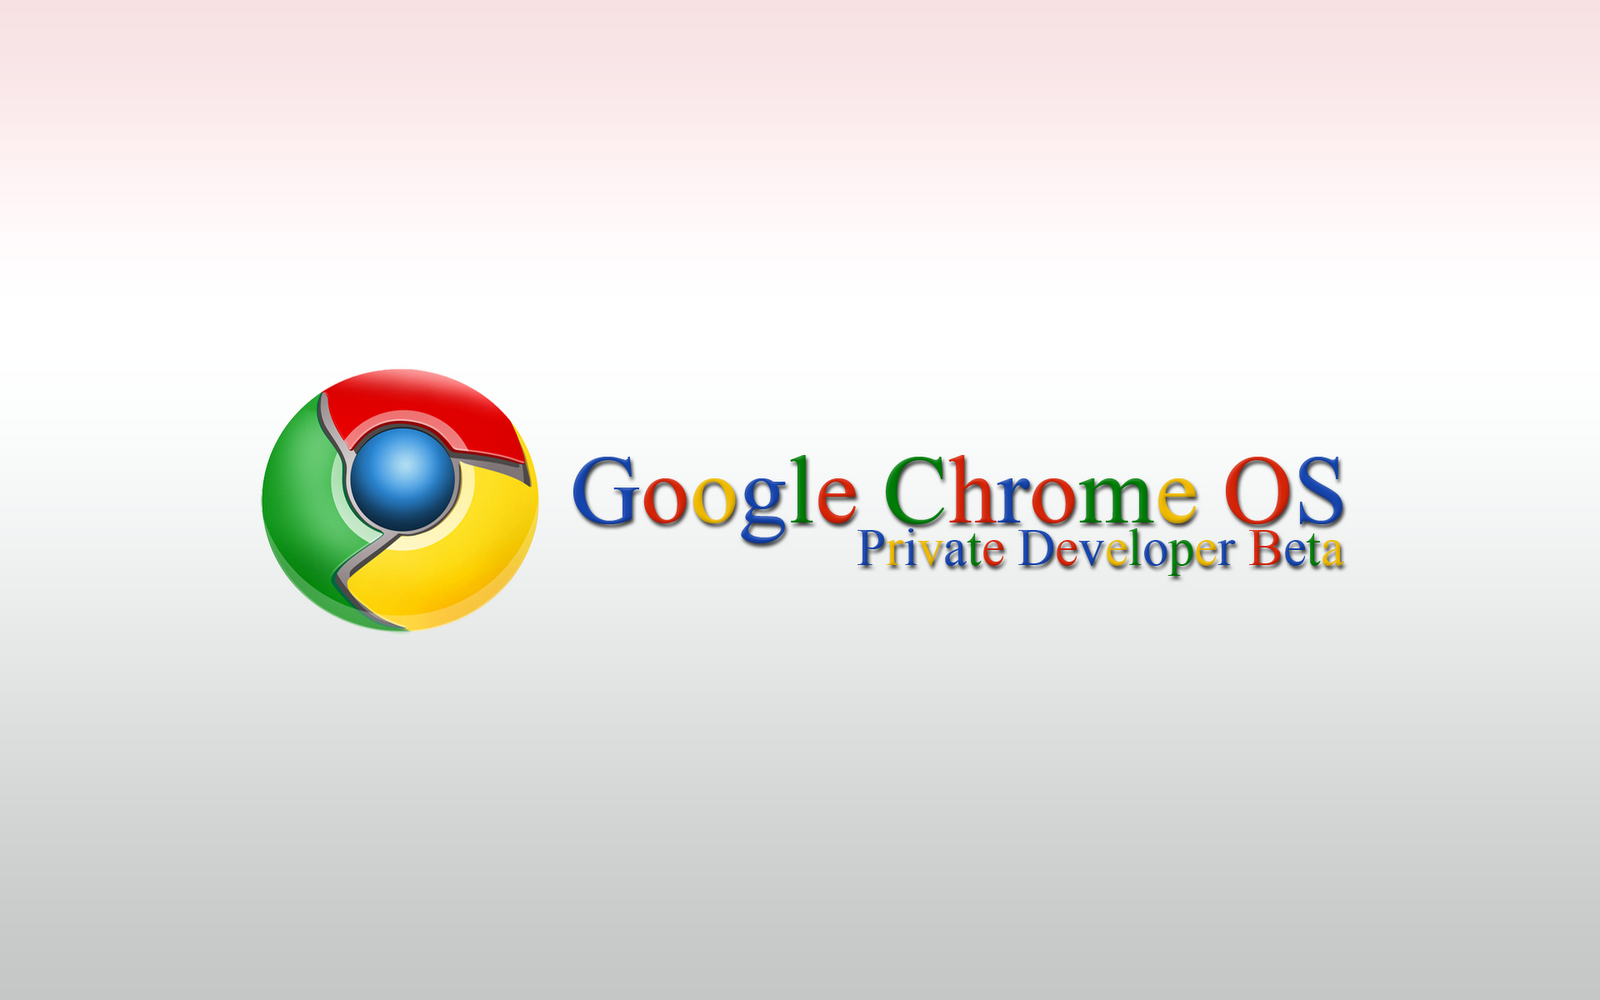 http://4.bp.blogspot.com/-R1pQg2oNazI/TfVpm5HRThI/AAAAAAAAHtM/9XiLHaOuPVM/s1600/Google+Chrome+OS+Wallpaper+HQ.png